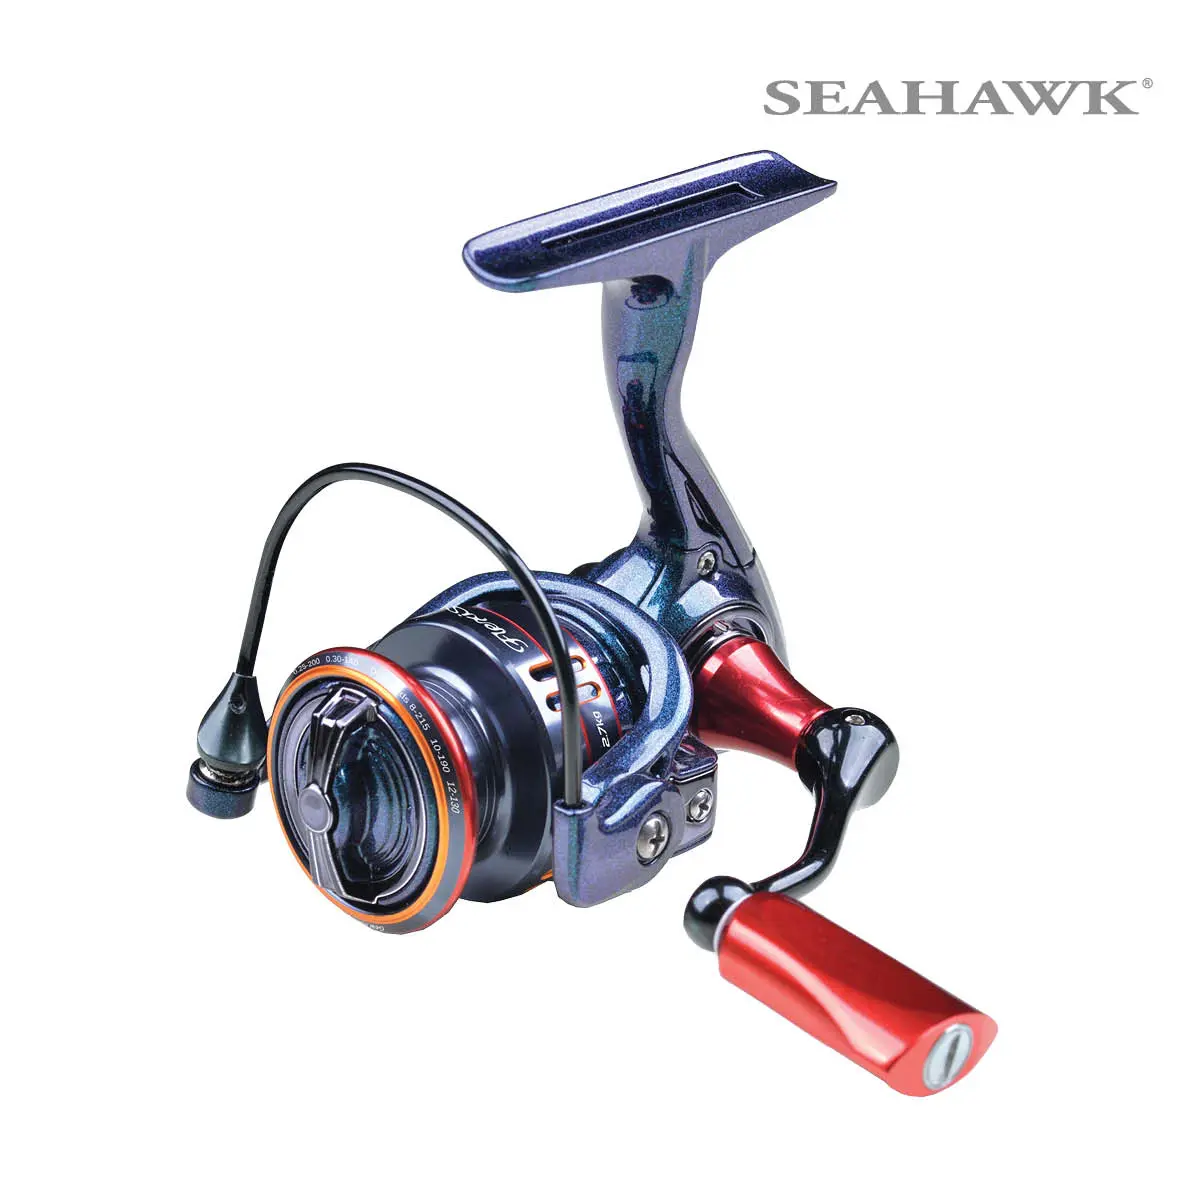 https://seahawkfishing.com/wp-content/uploads/2021/05/Seahawk-Flexis-Lite-01.jpg.webp